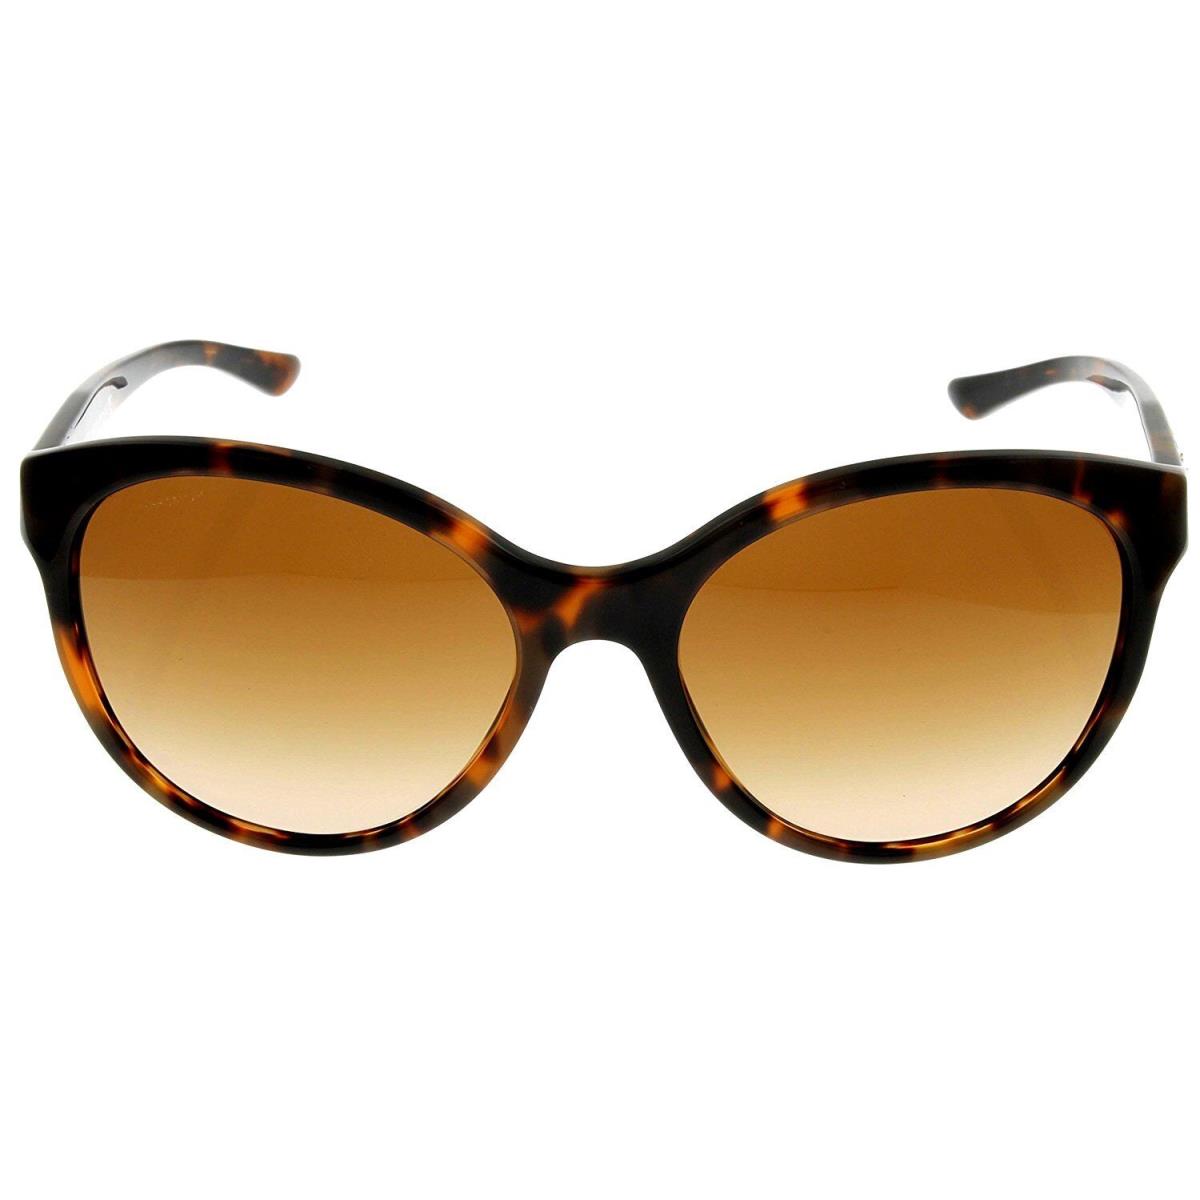 Versace Sunglasses Women Oval Brown Havana VE4282 944/13 Fashion